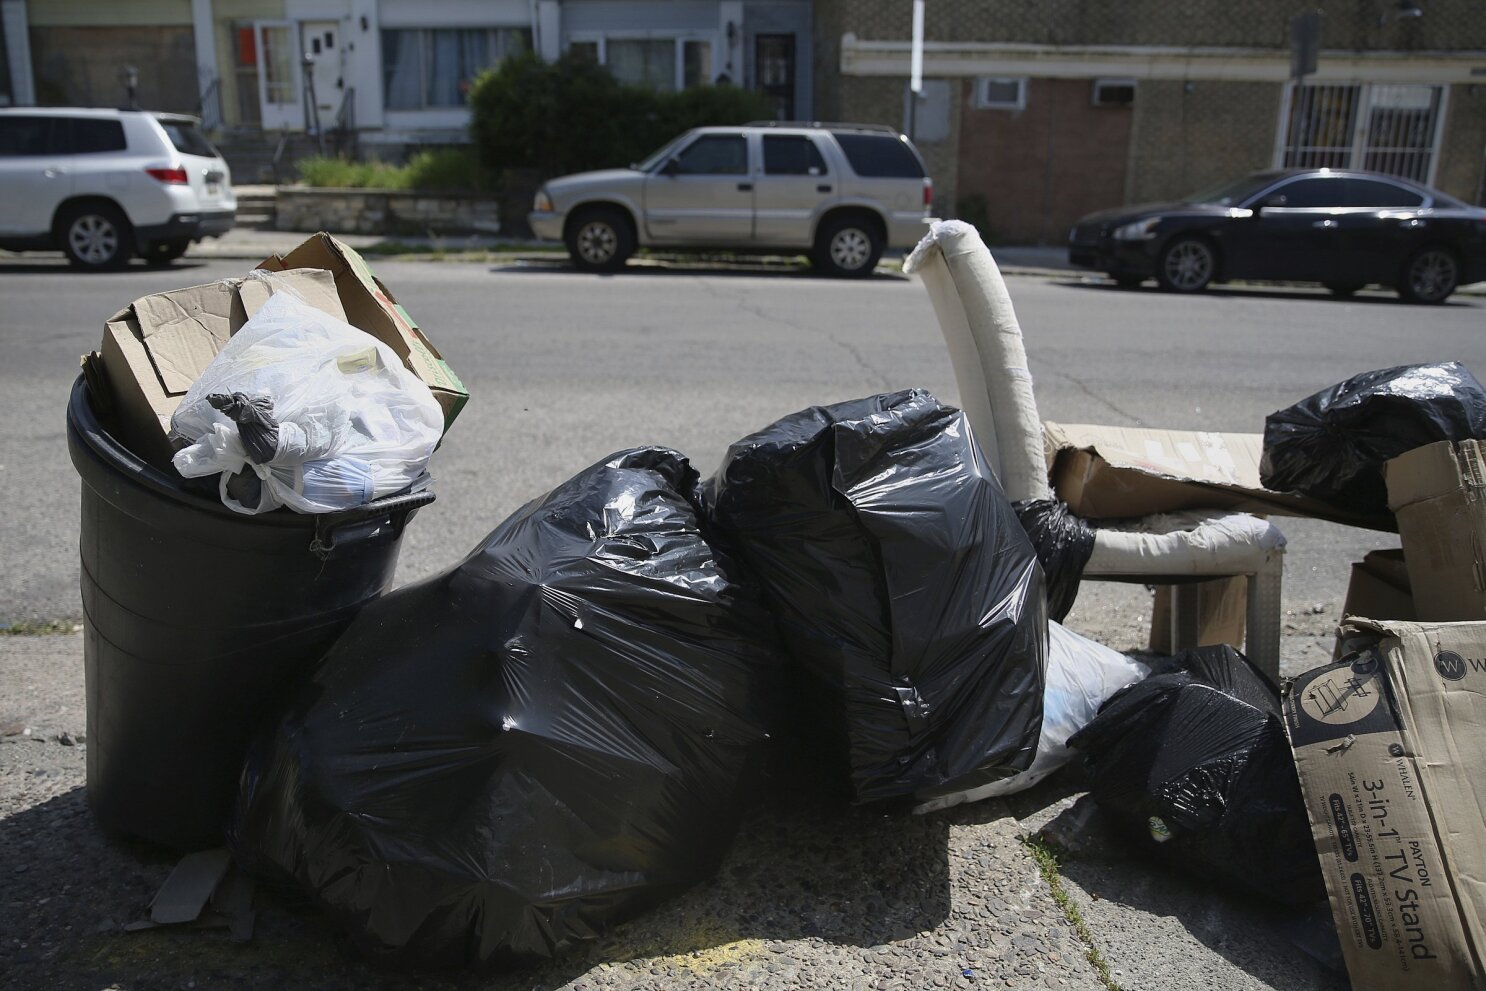 Building It Better Together: Philadelphia's biggest problem areas for trash  - 6abc Philadelphia